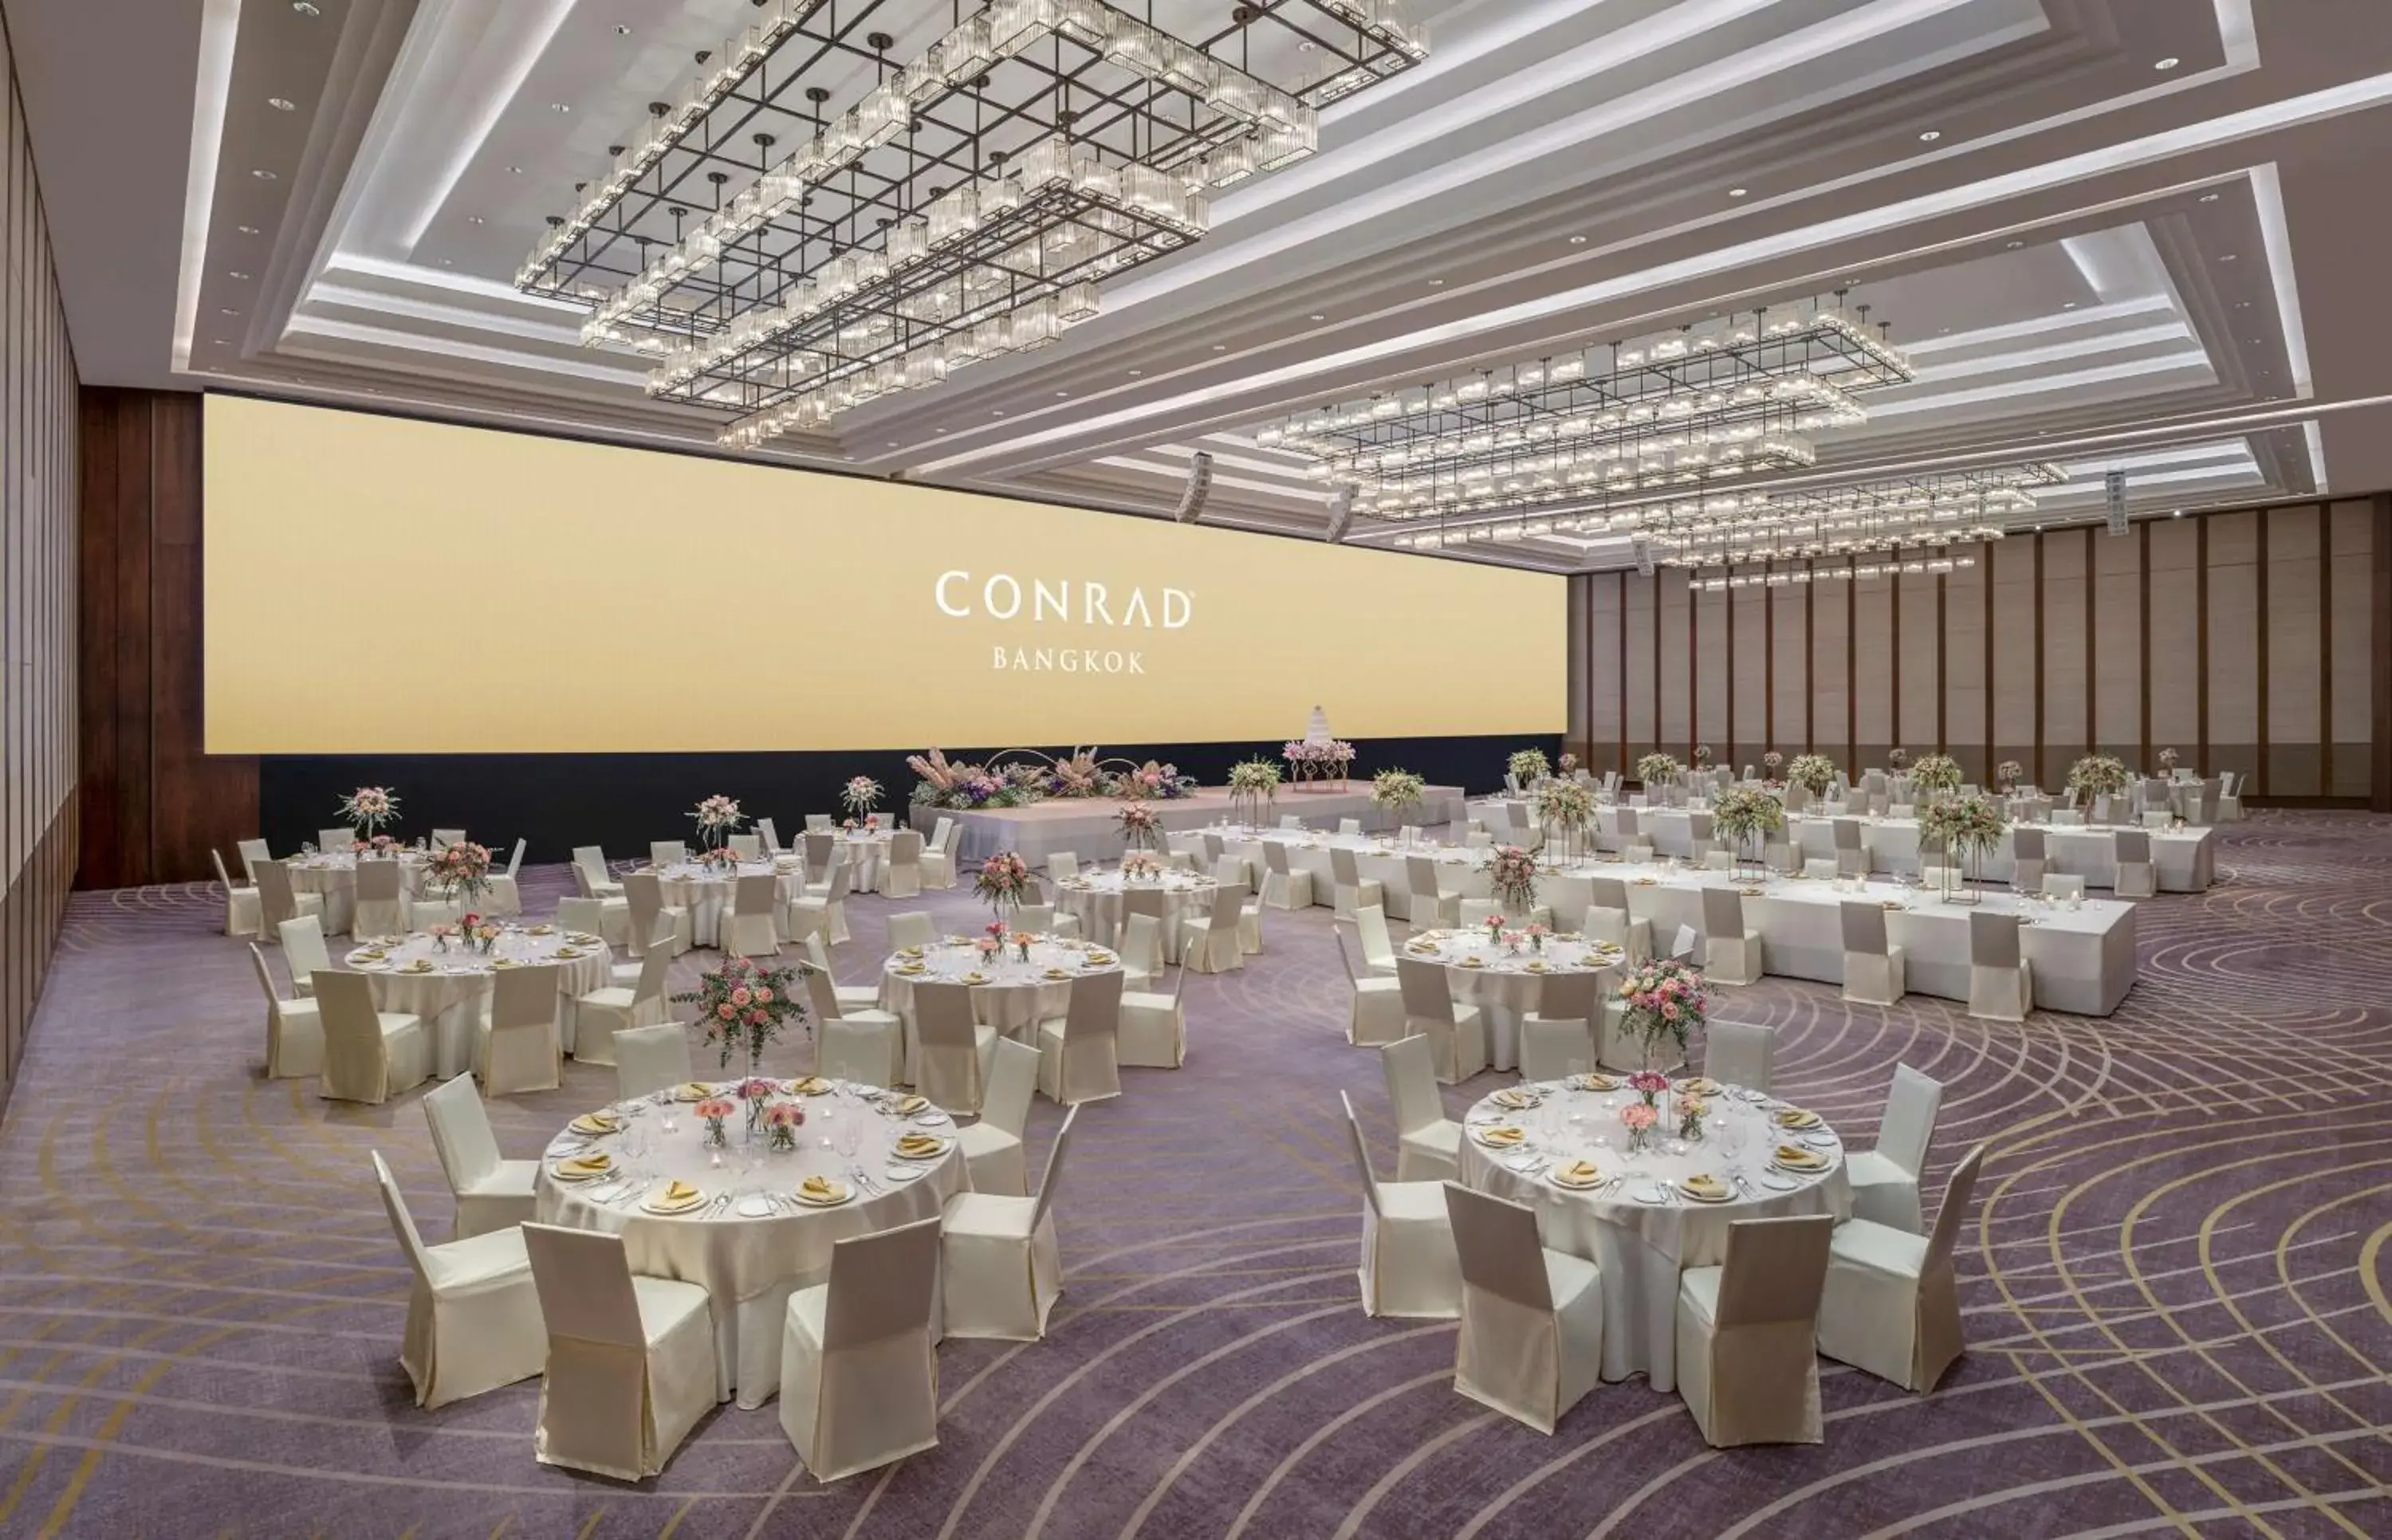 Meeting/conference room, Banquet Facilities in Conrad Bangkok